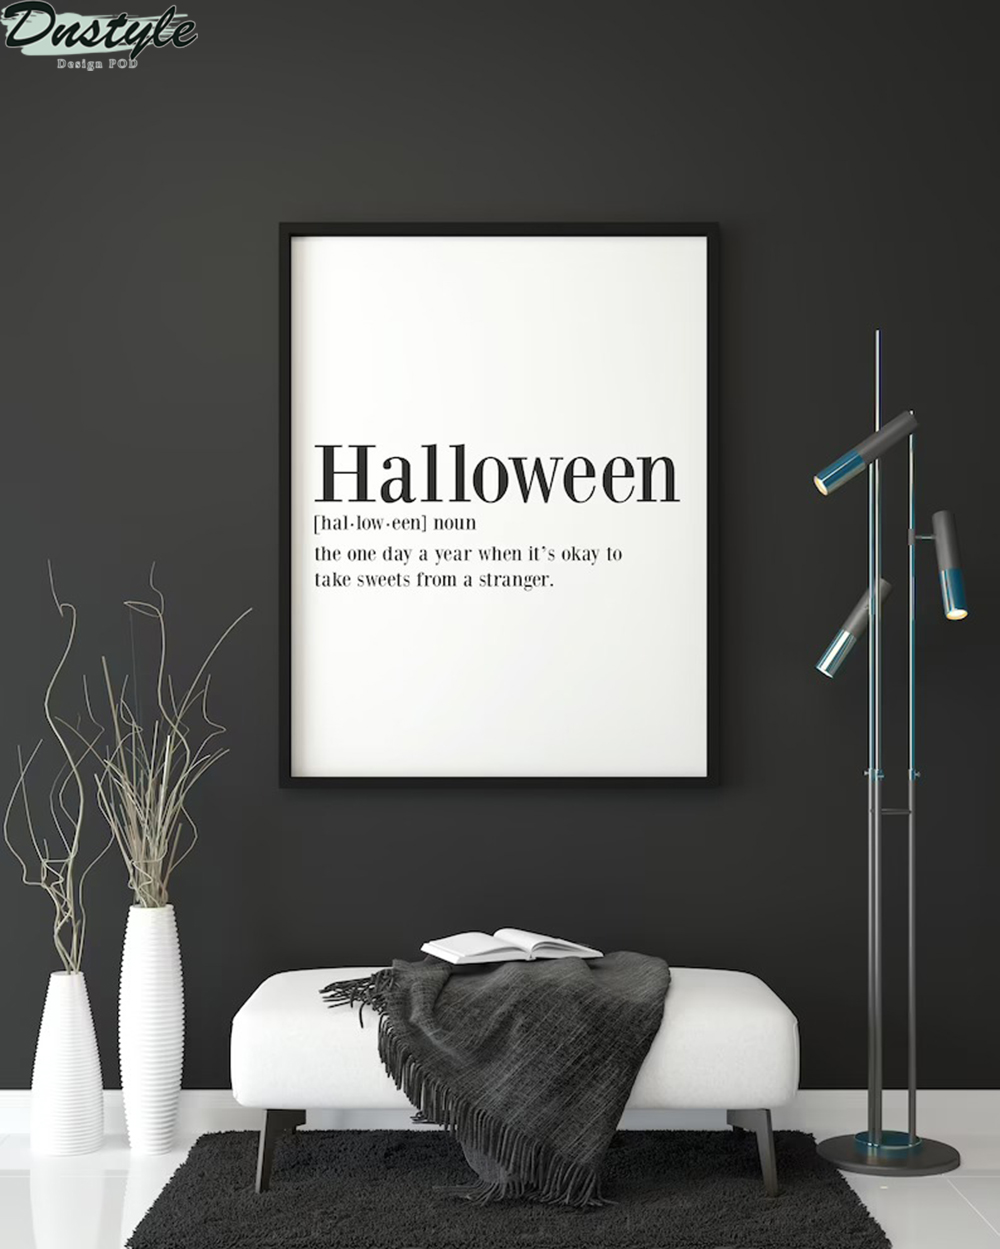 Halloween definition poster